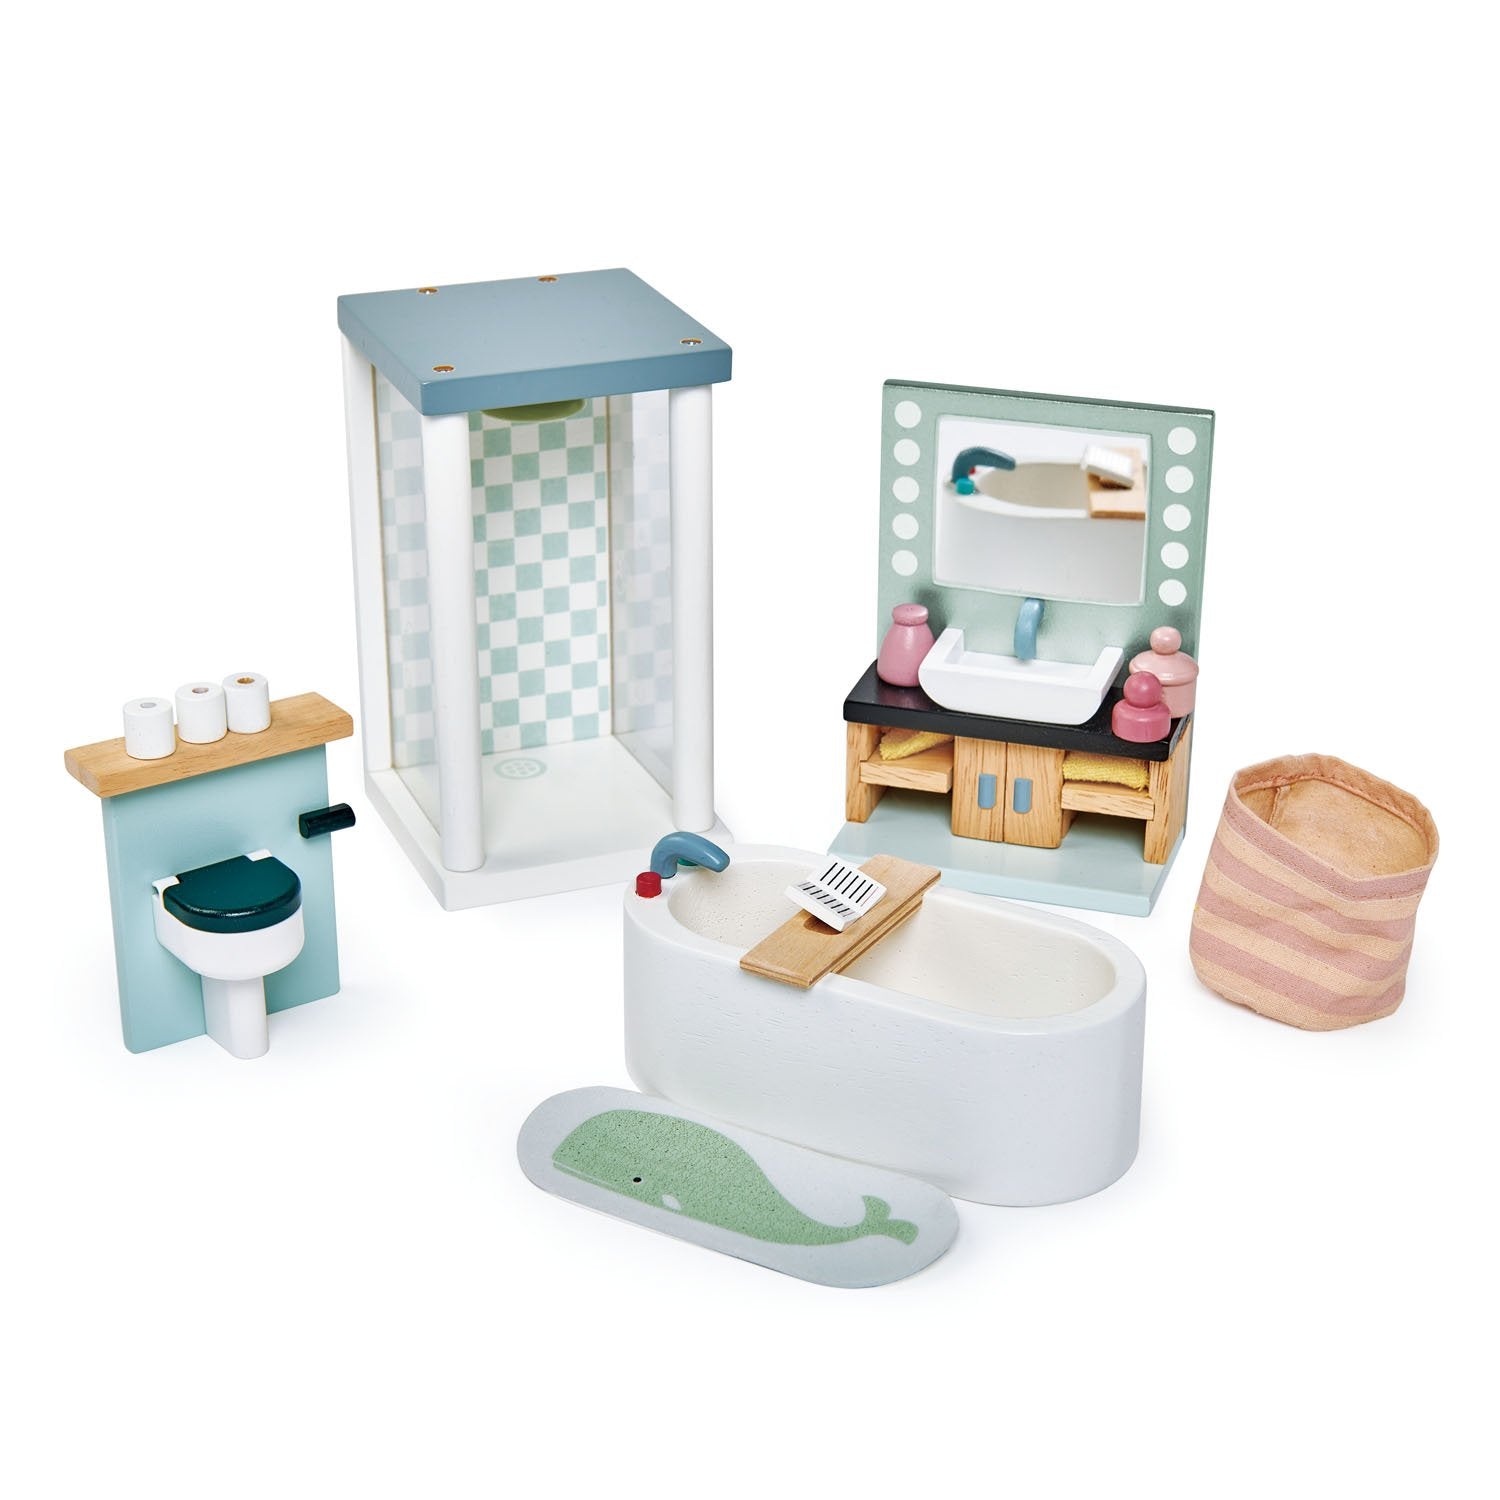 Dolls House Bathroom Furniture by Tender Leaf Toys